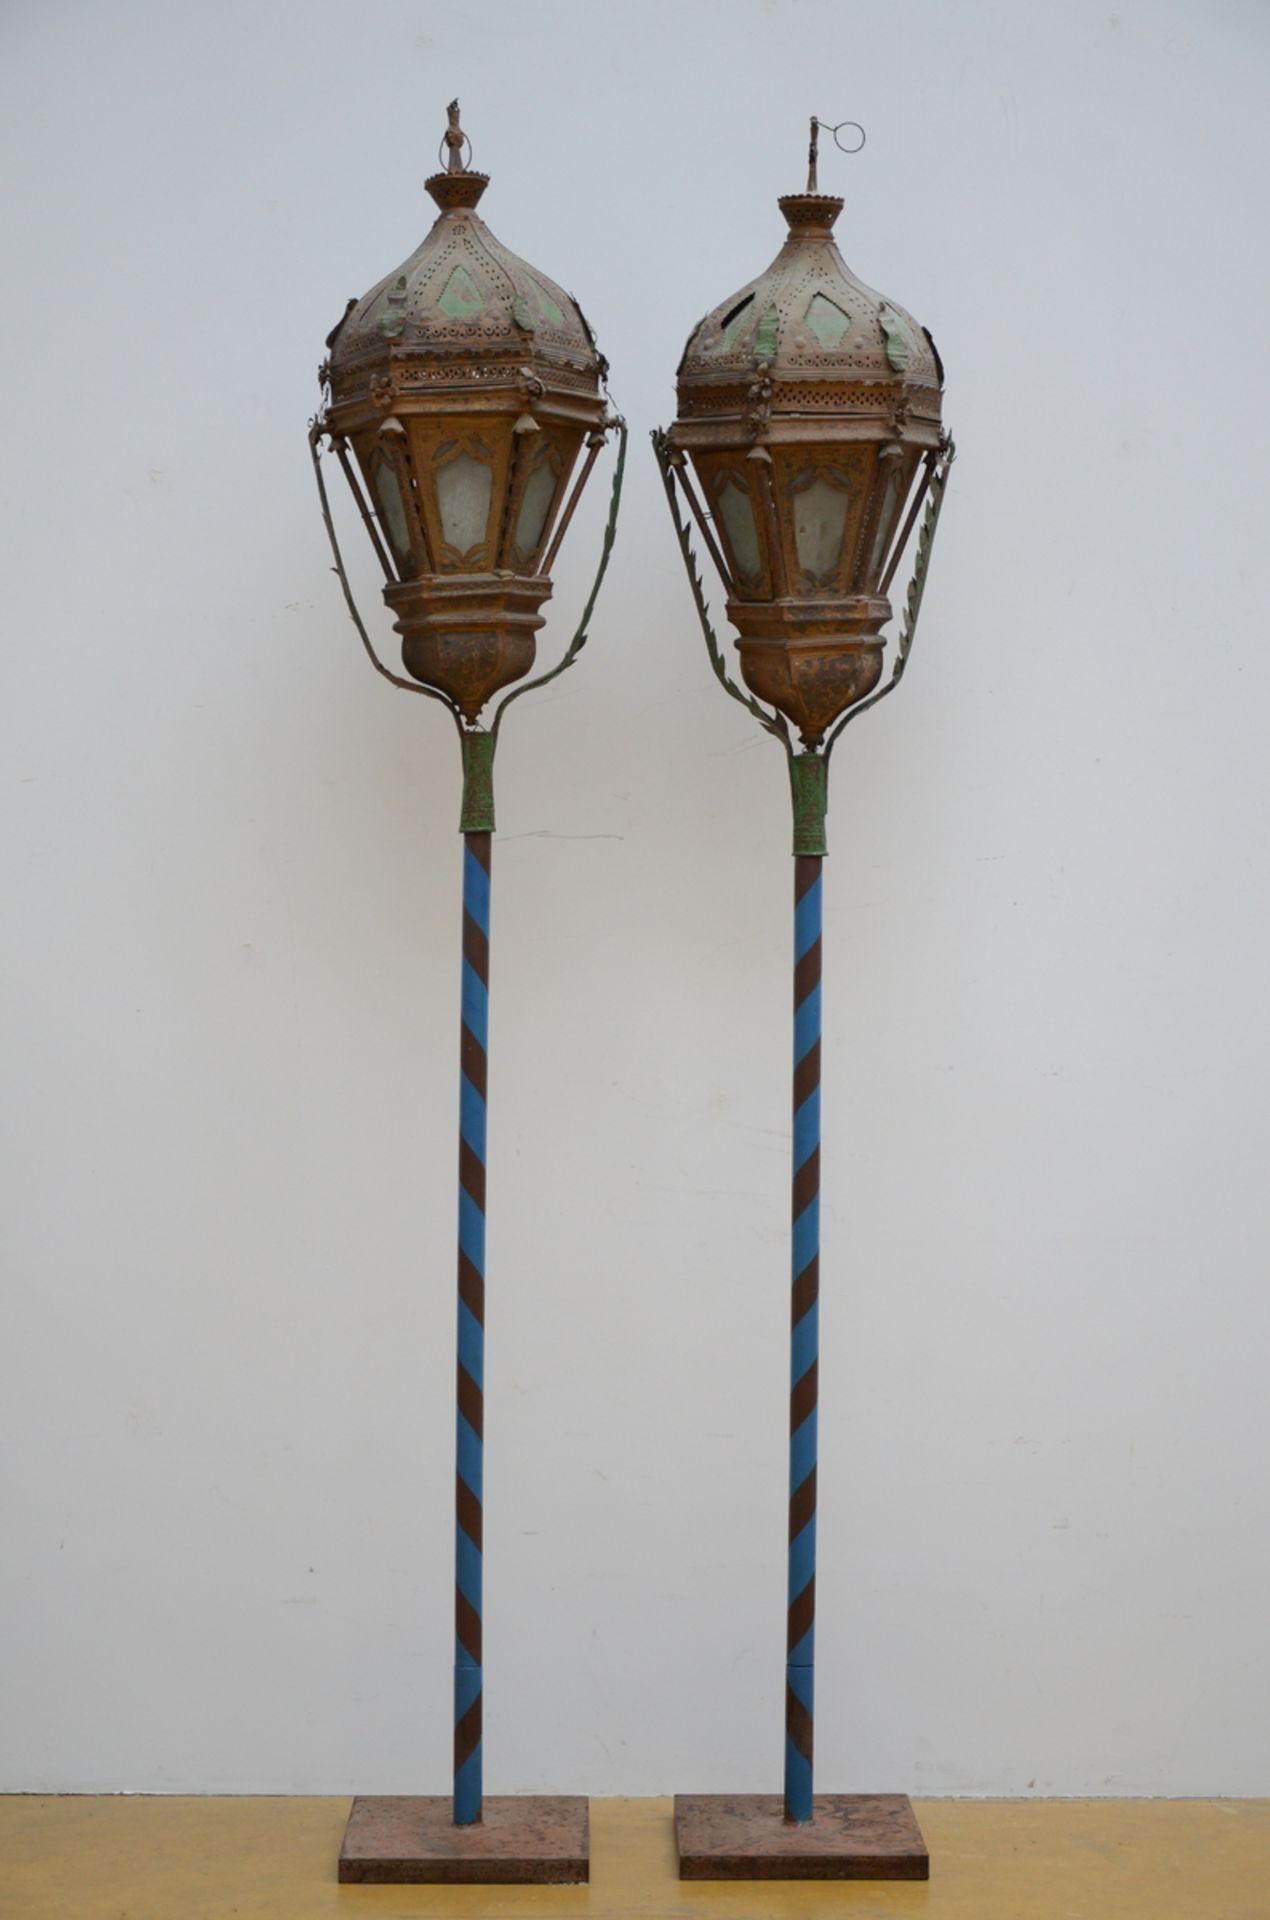 A pair of Venetian lanterns in tôle, 18th - 19th century (lantern 93 cm)